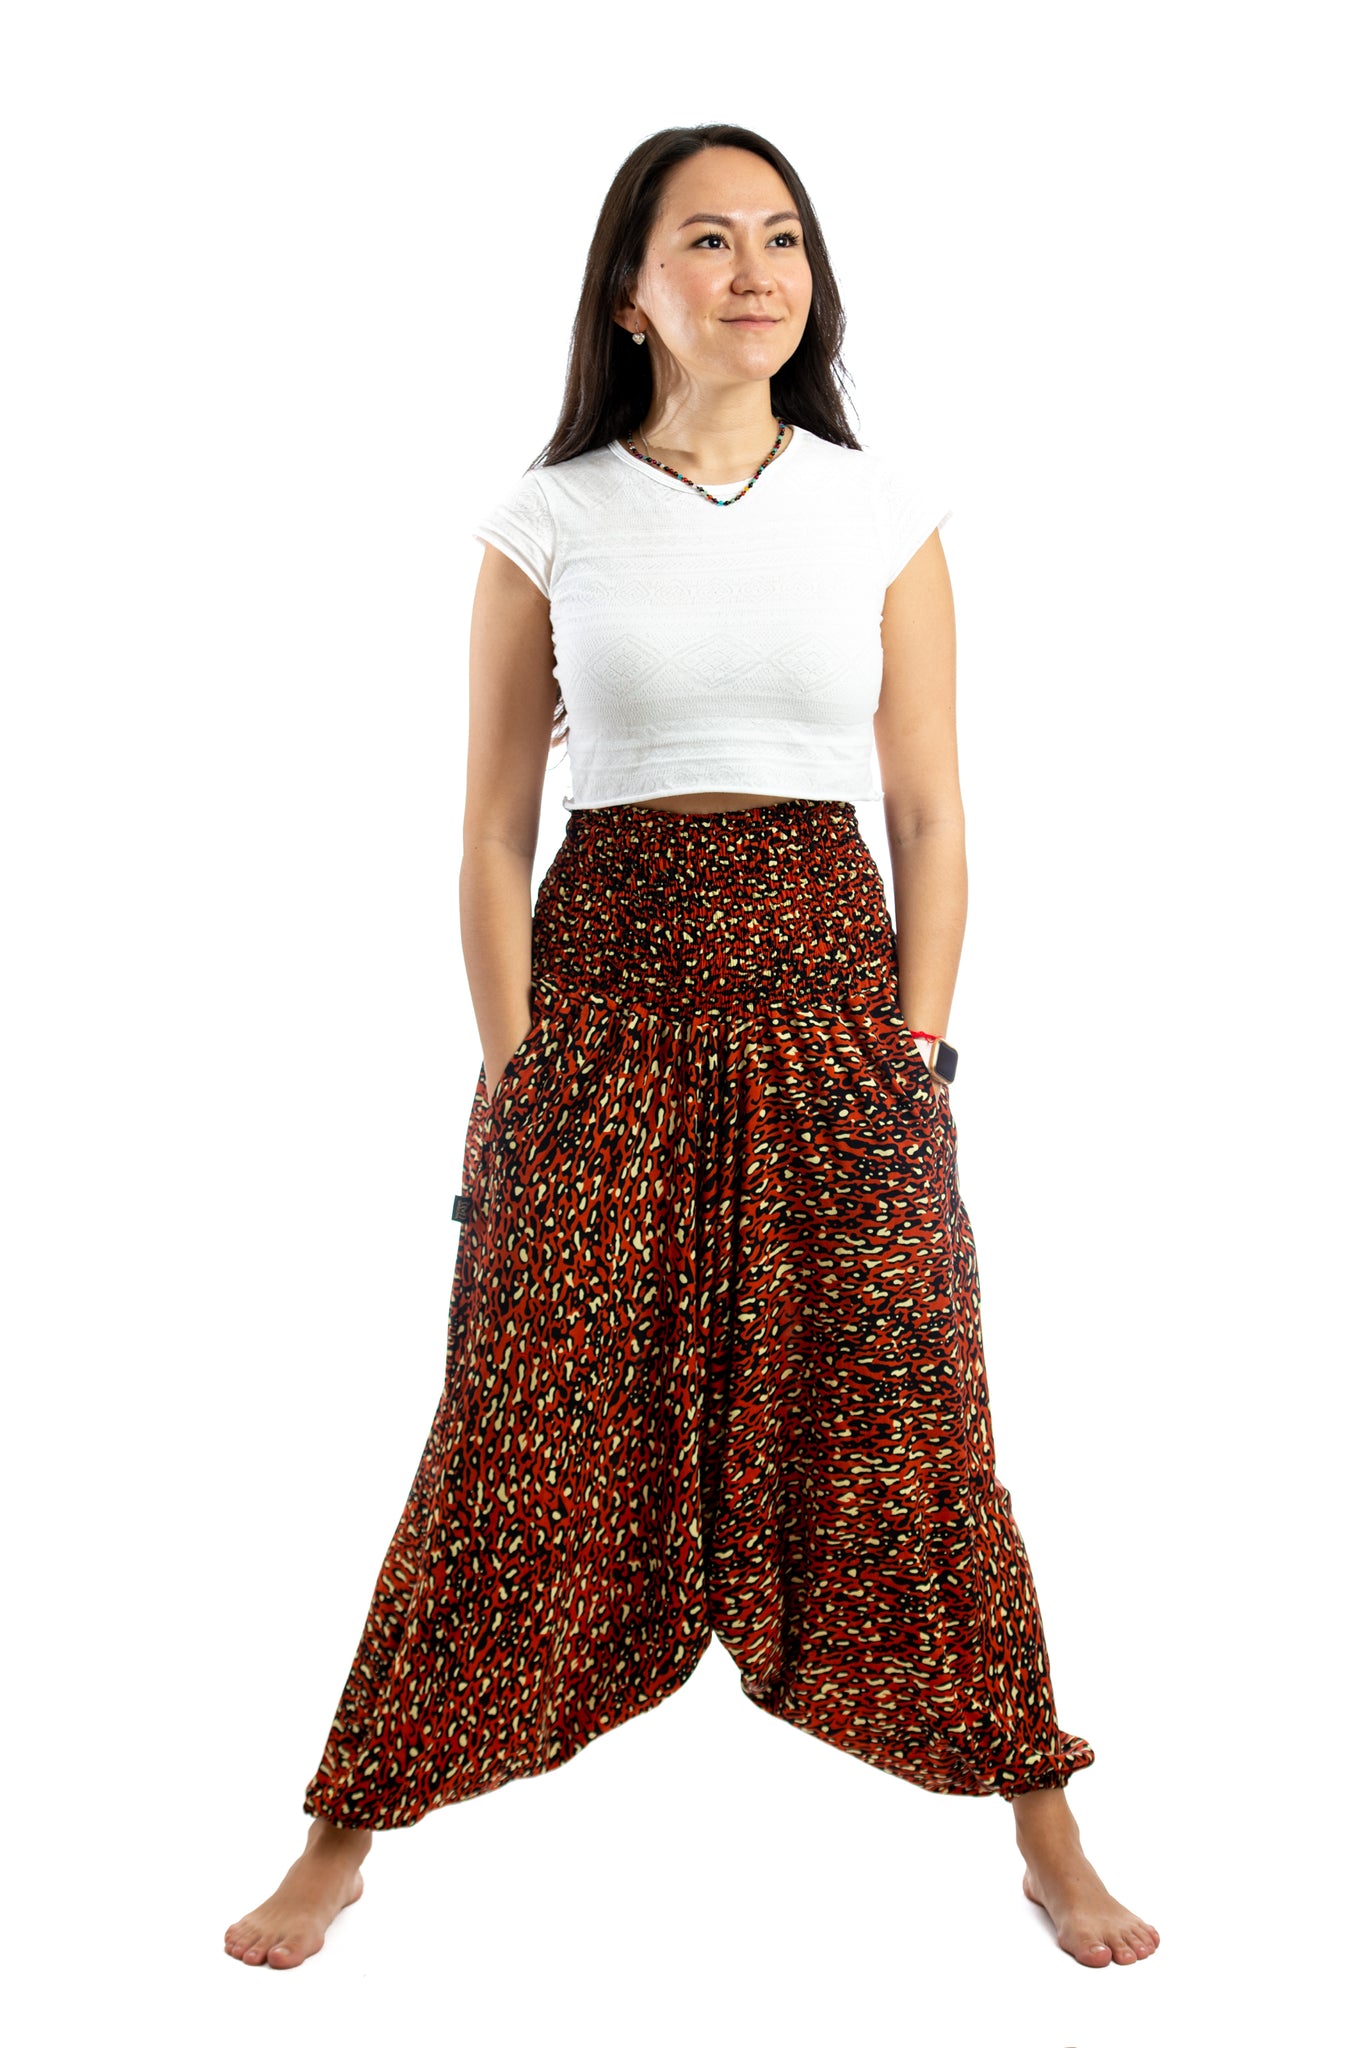 Handmade Women Flowy Harem Pants - Jumpsuit Smocked Waist (Red Leopard)